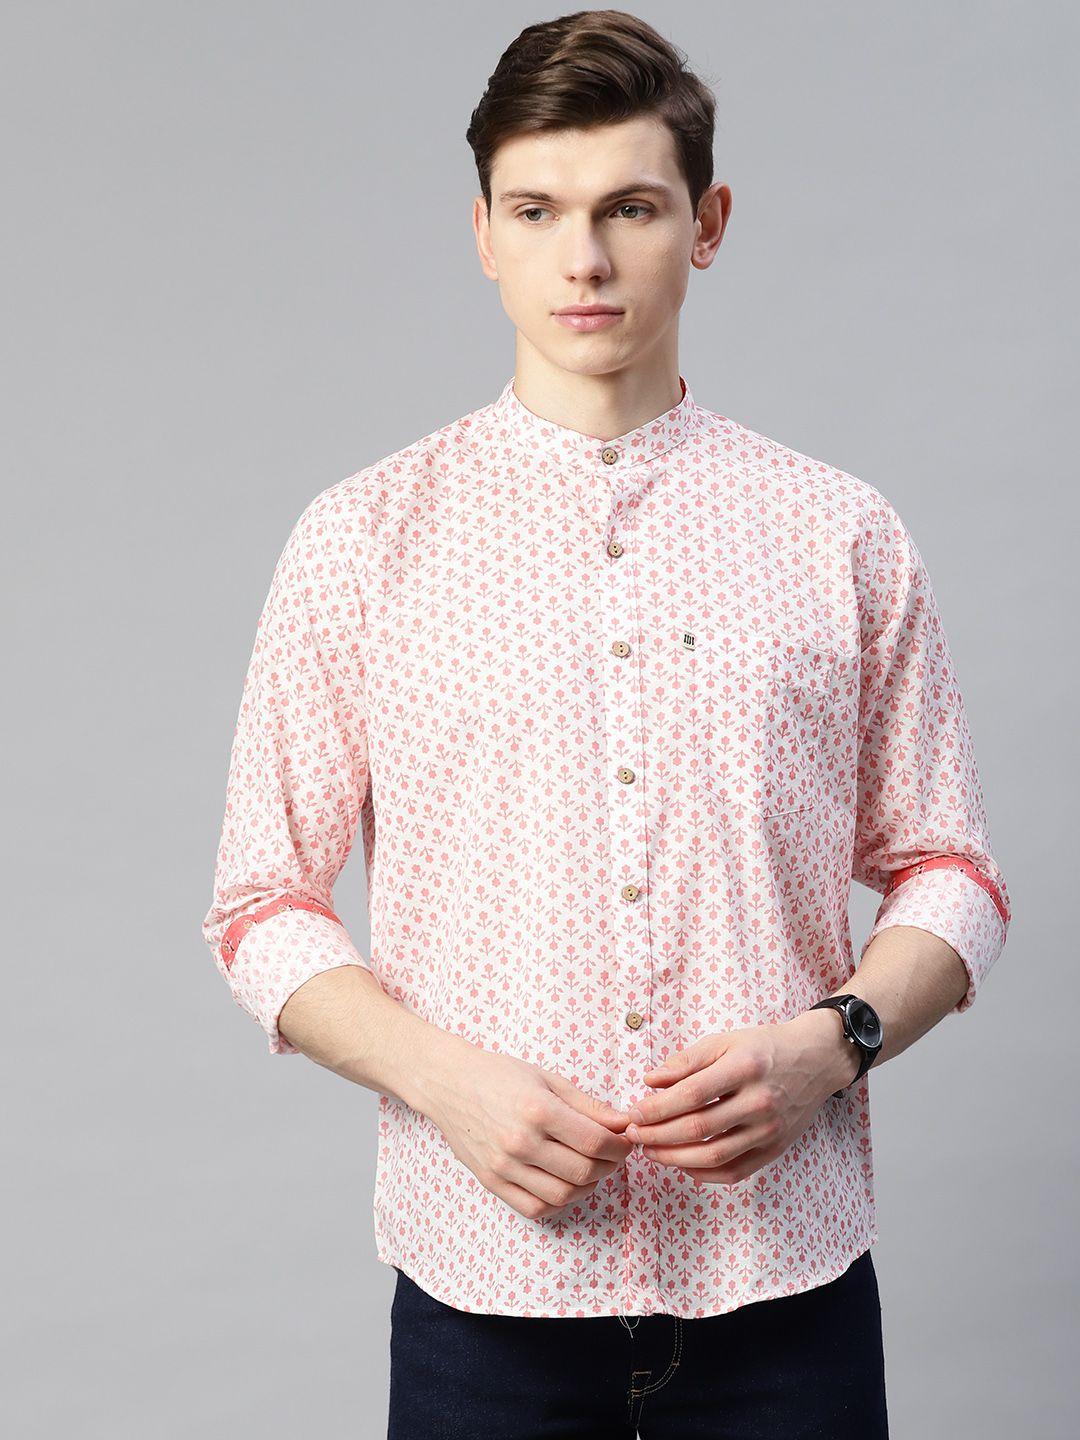 readiprint fashions men pink comfort printed cotton casual shirt